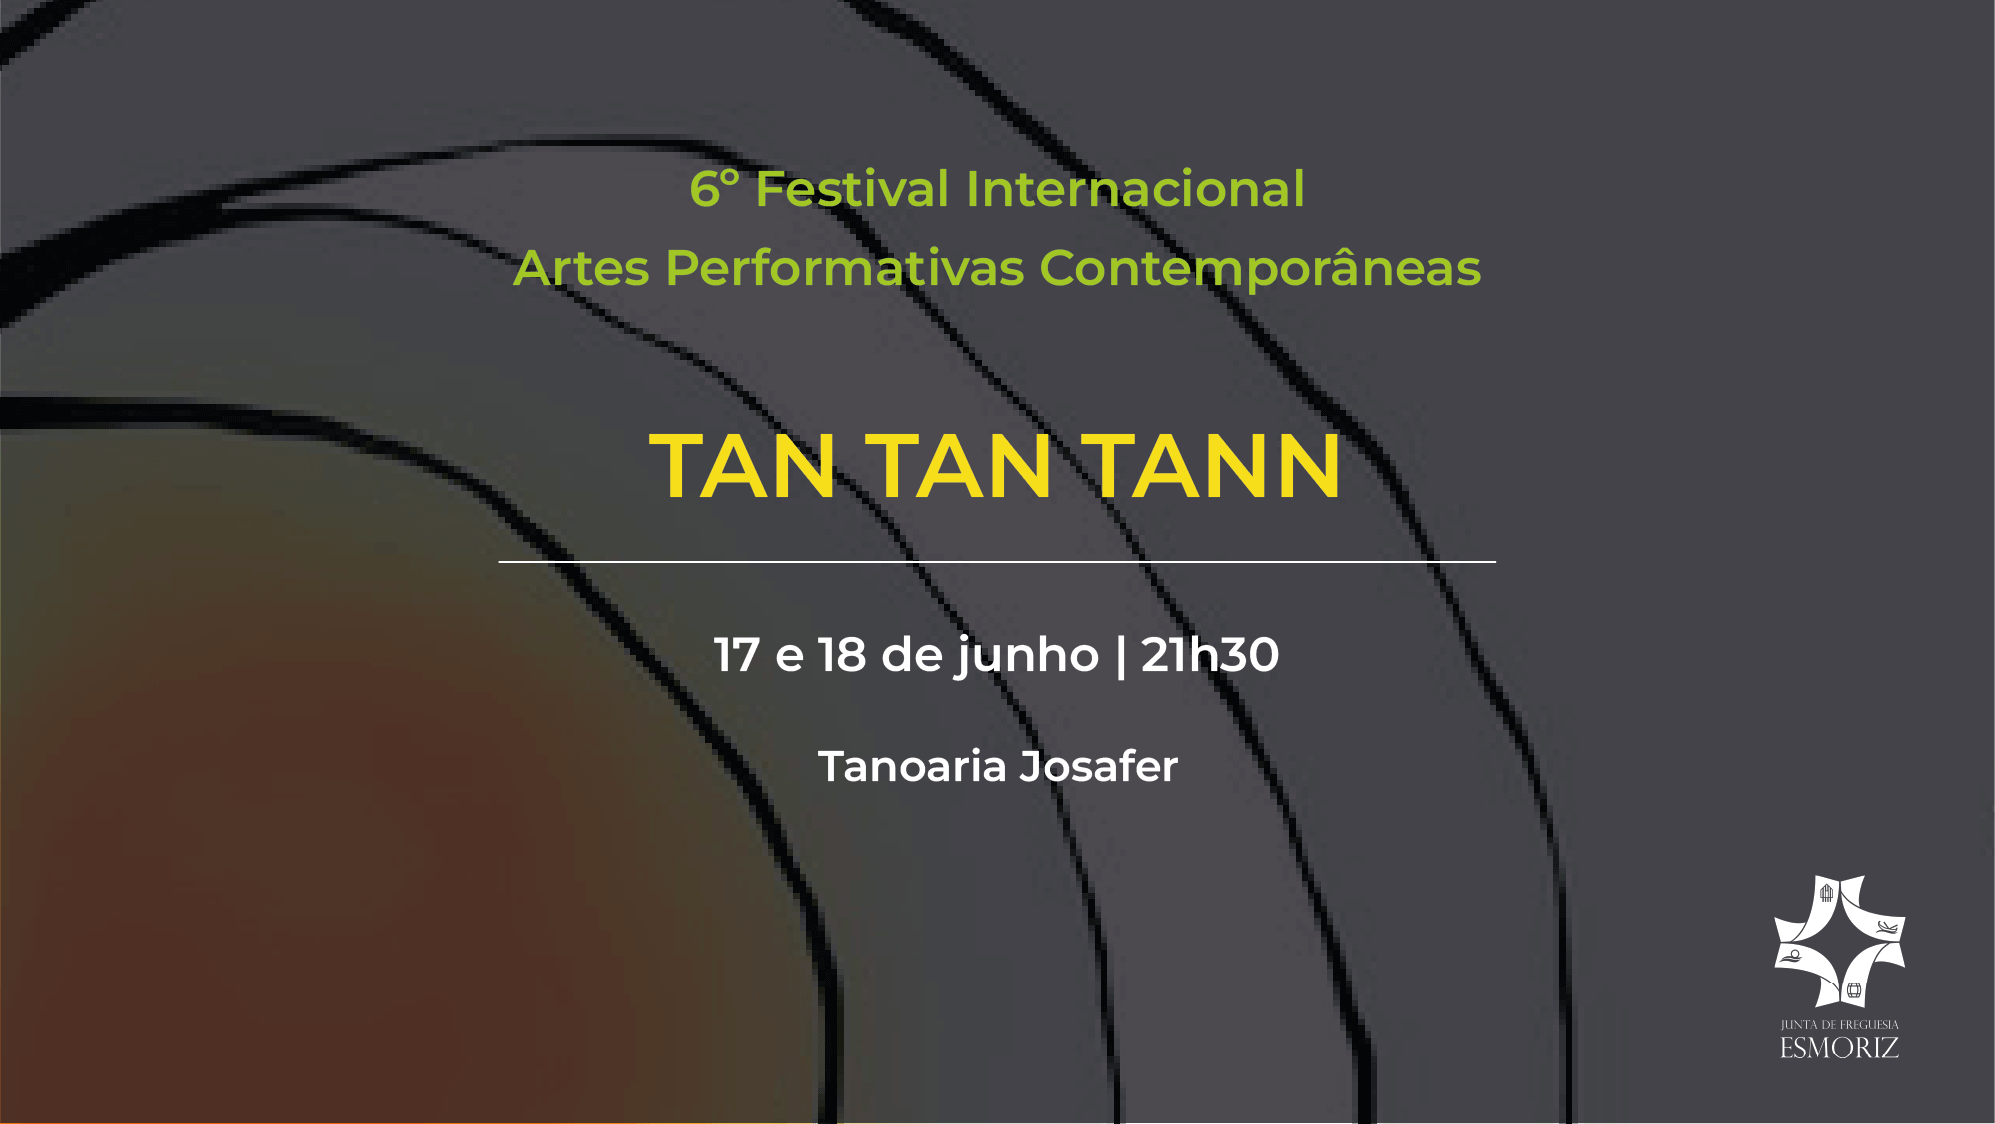 6º Festival Internacional de Artes Perfomativas Contemporâneas